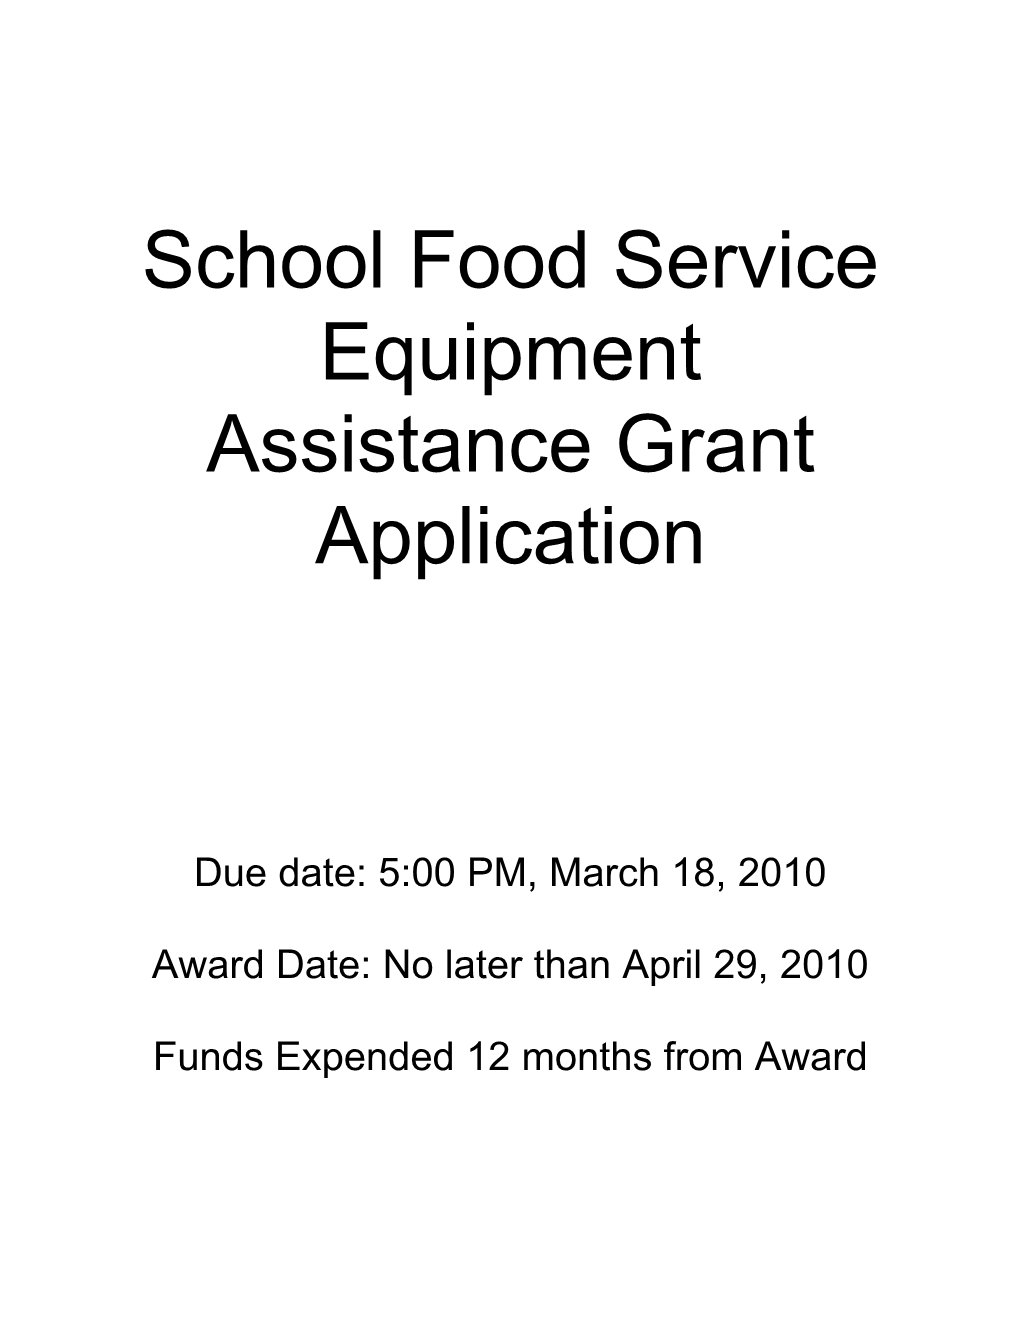 School Food Service Equipment Assistance Grant